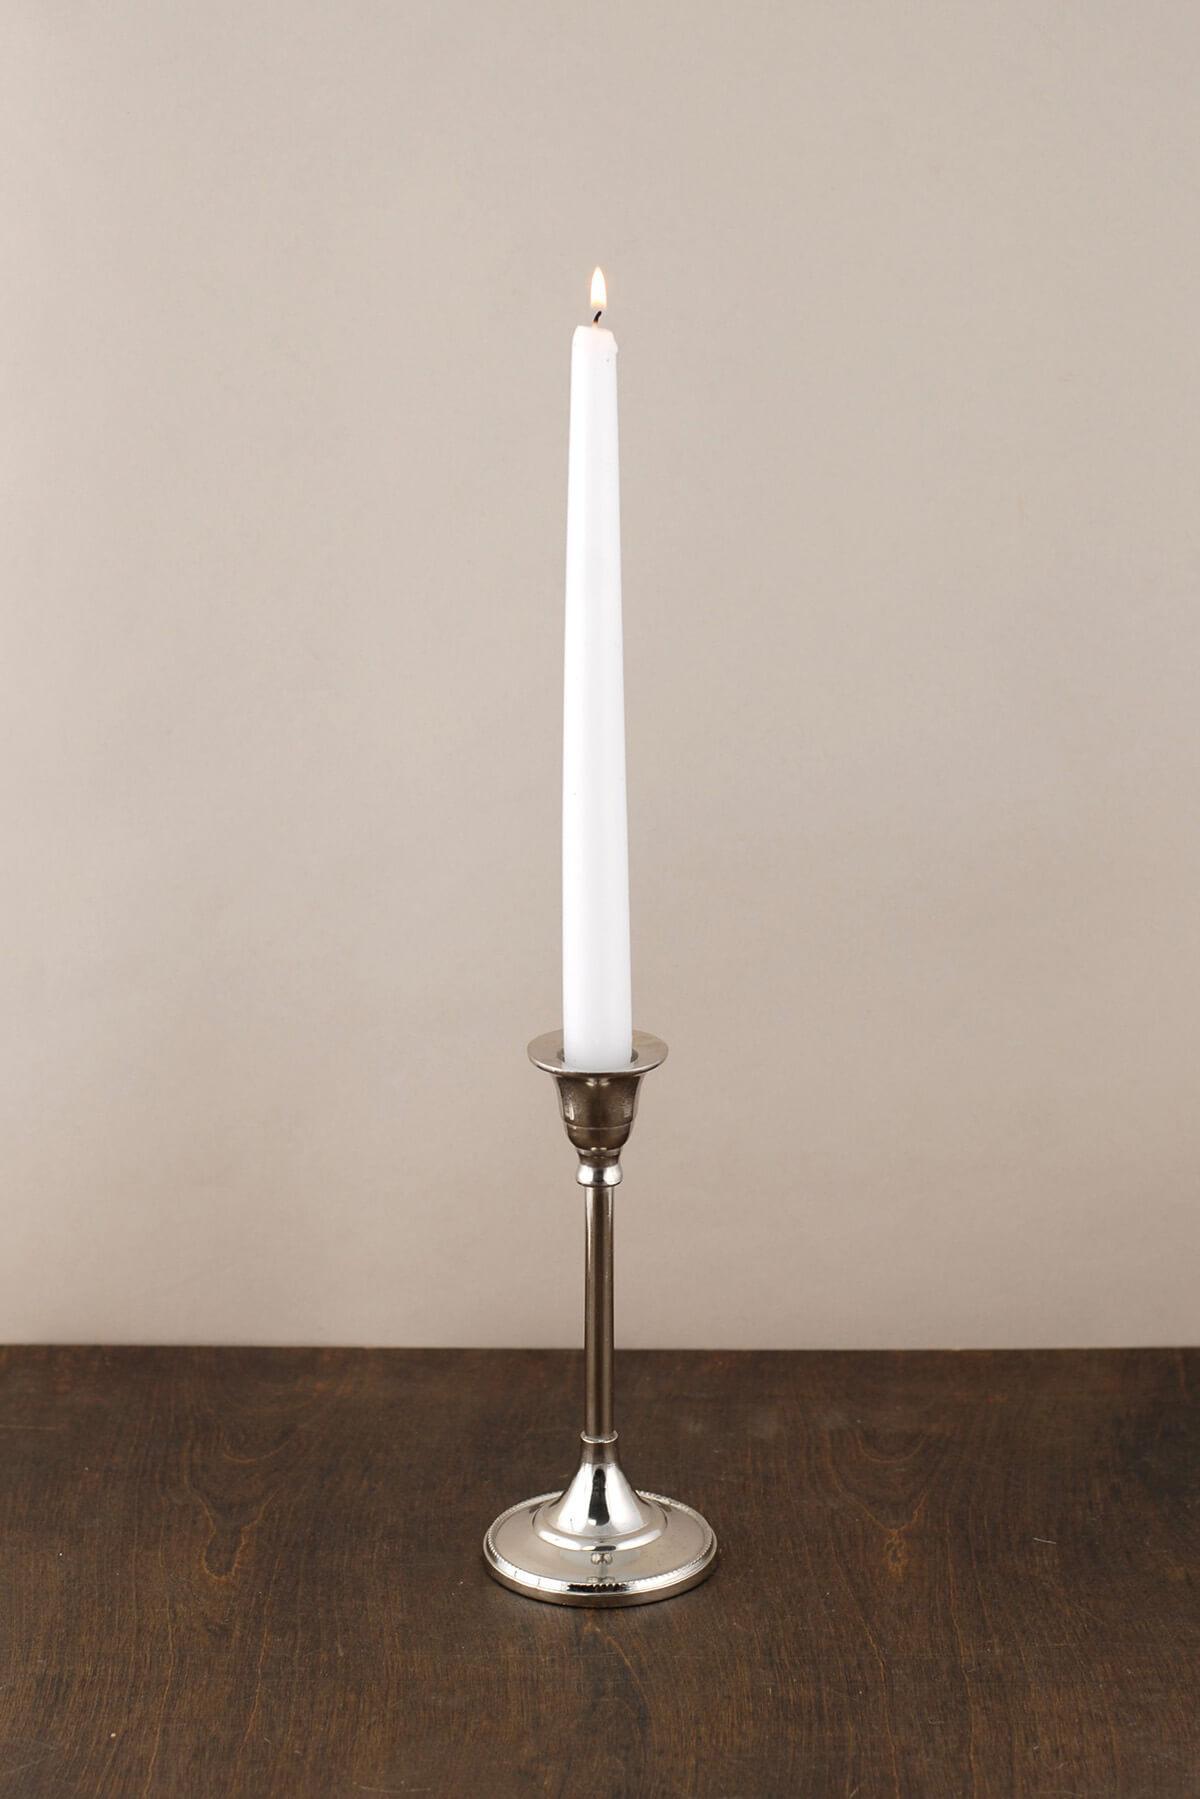 Tall Metal Candlestick